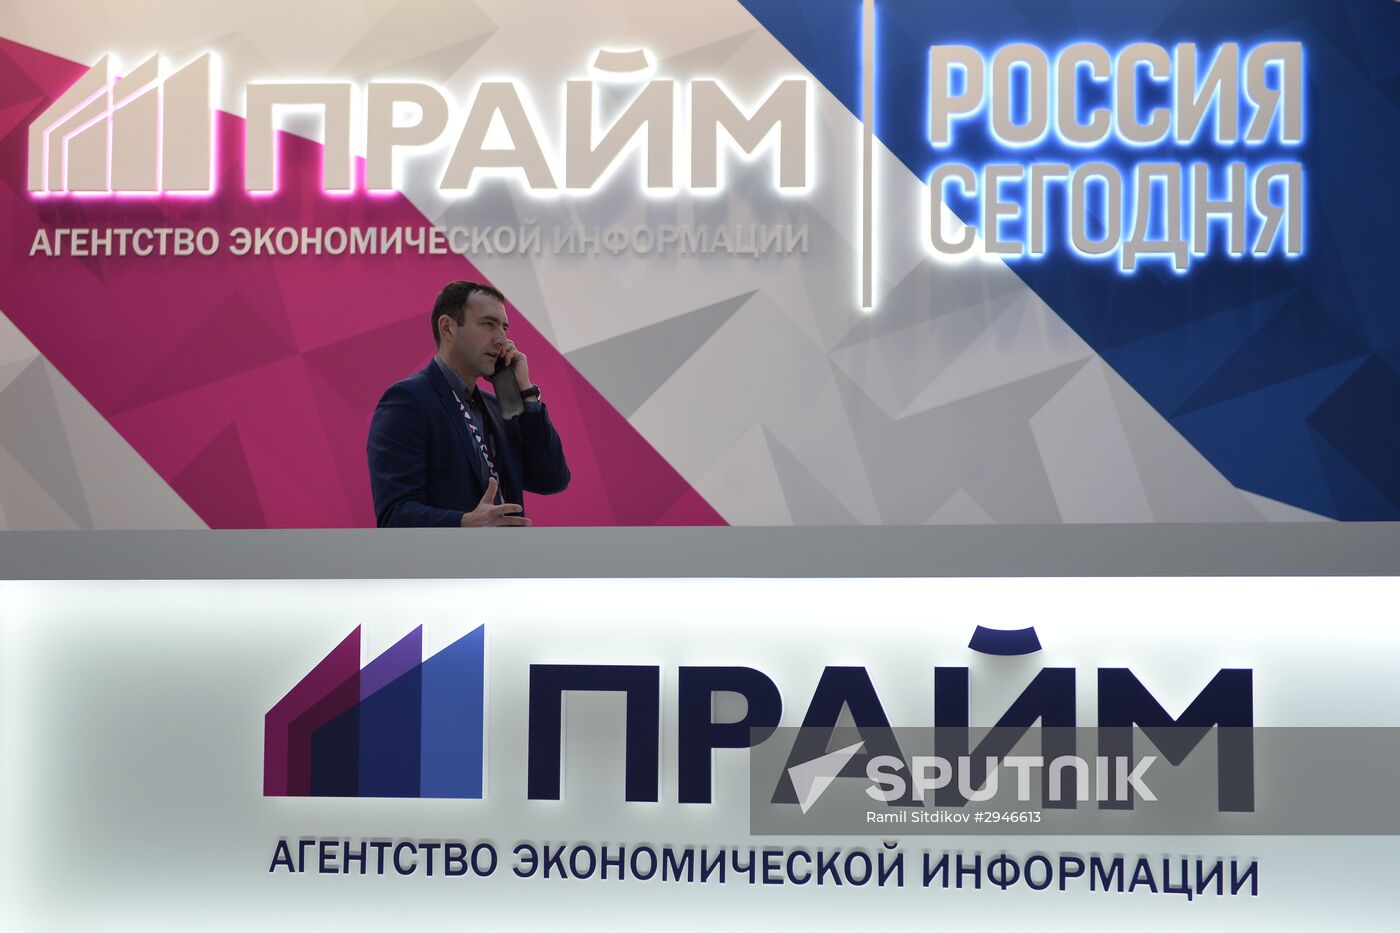 The Sochi International Investment Forum 2016